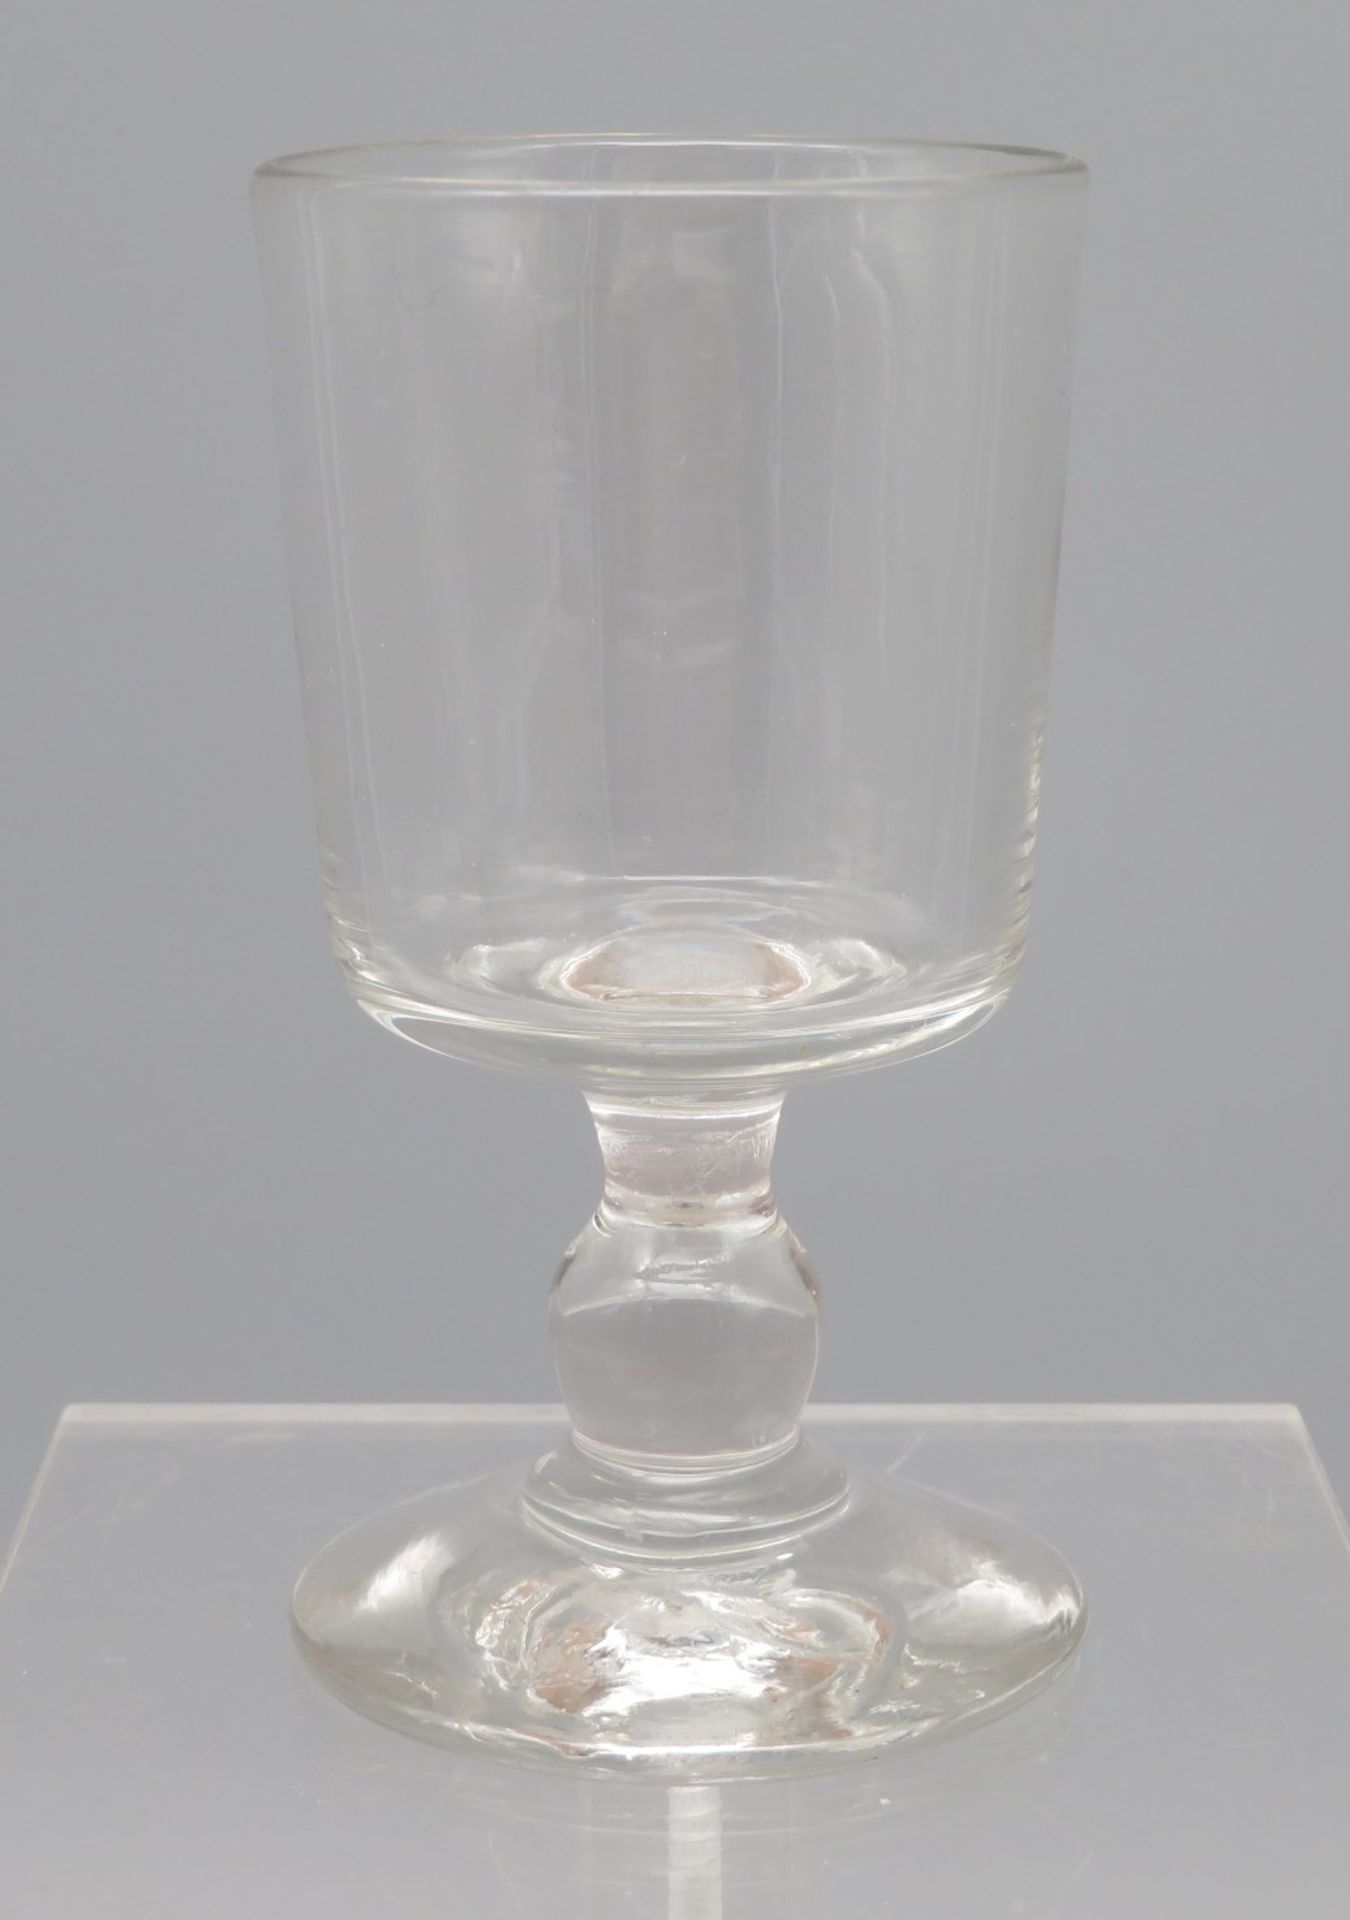 10 diverse Weingläser, 1. Hälfte 19. Jahrhundert, farbloses Glas, h 10,5 cm, d 5,5 cm. - Image 2 of 2